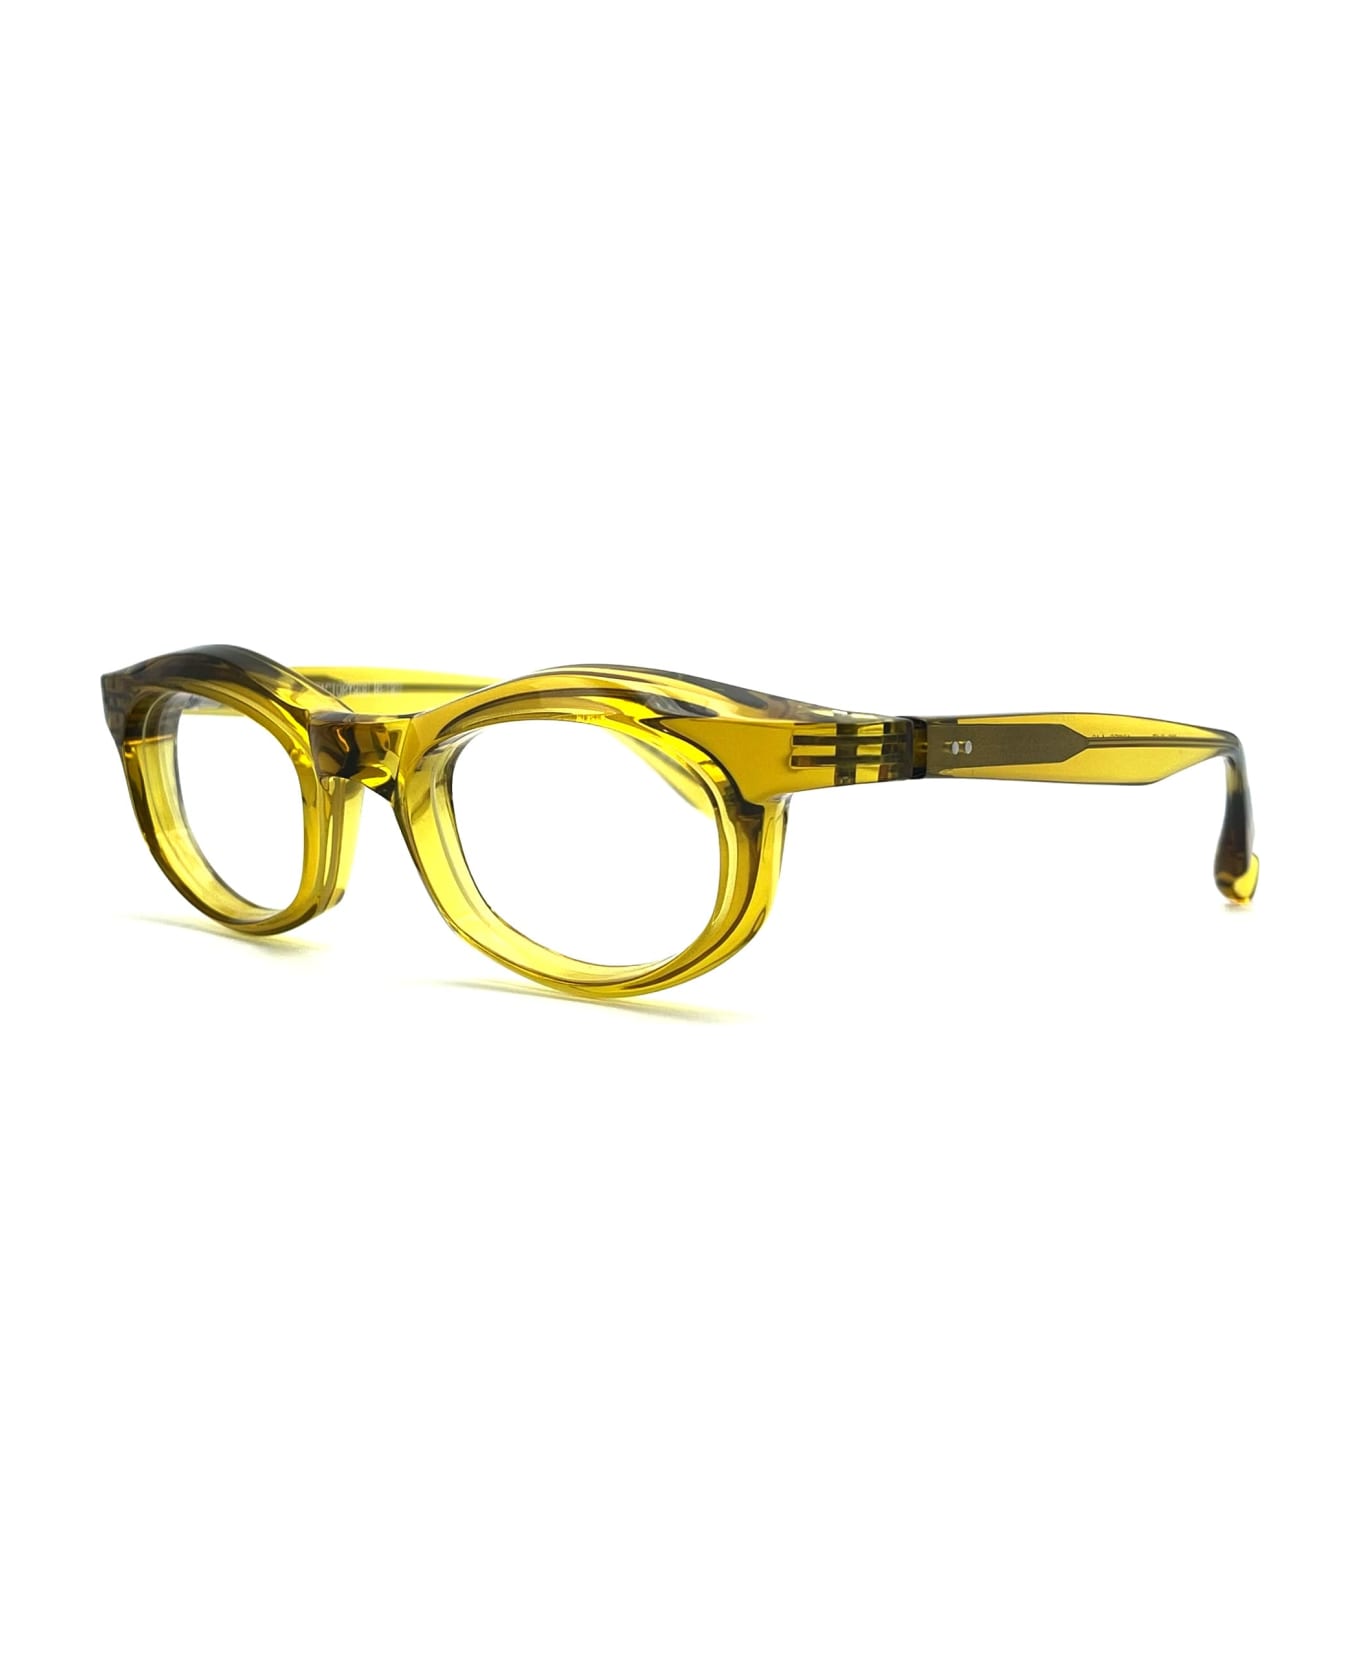 FACTORY900 Rf 043-615 Glasses - yellow trasparent アイウェア